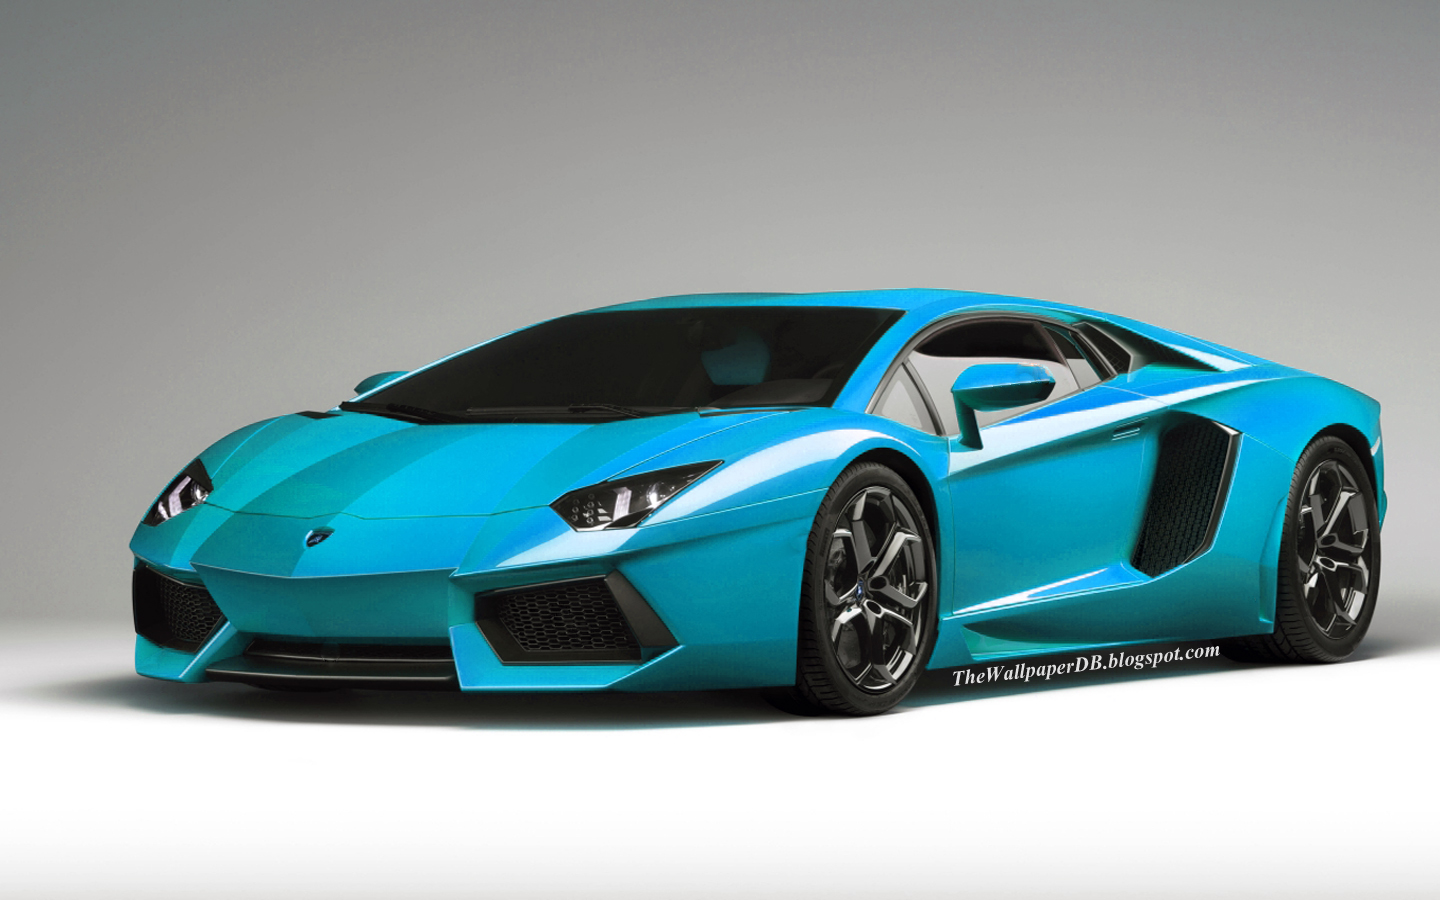 Lamborghini Aventador Wallpaper HD Turquoise Blue